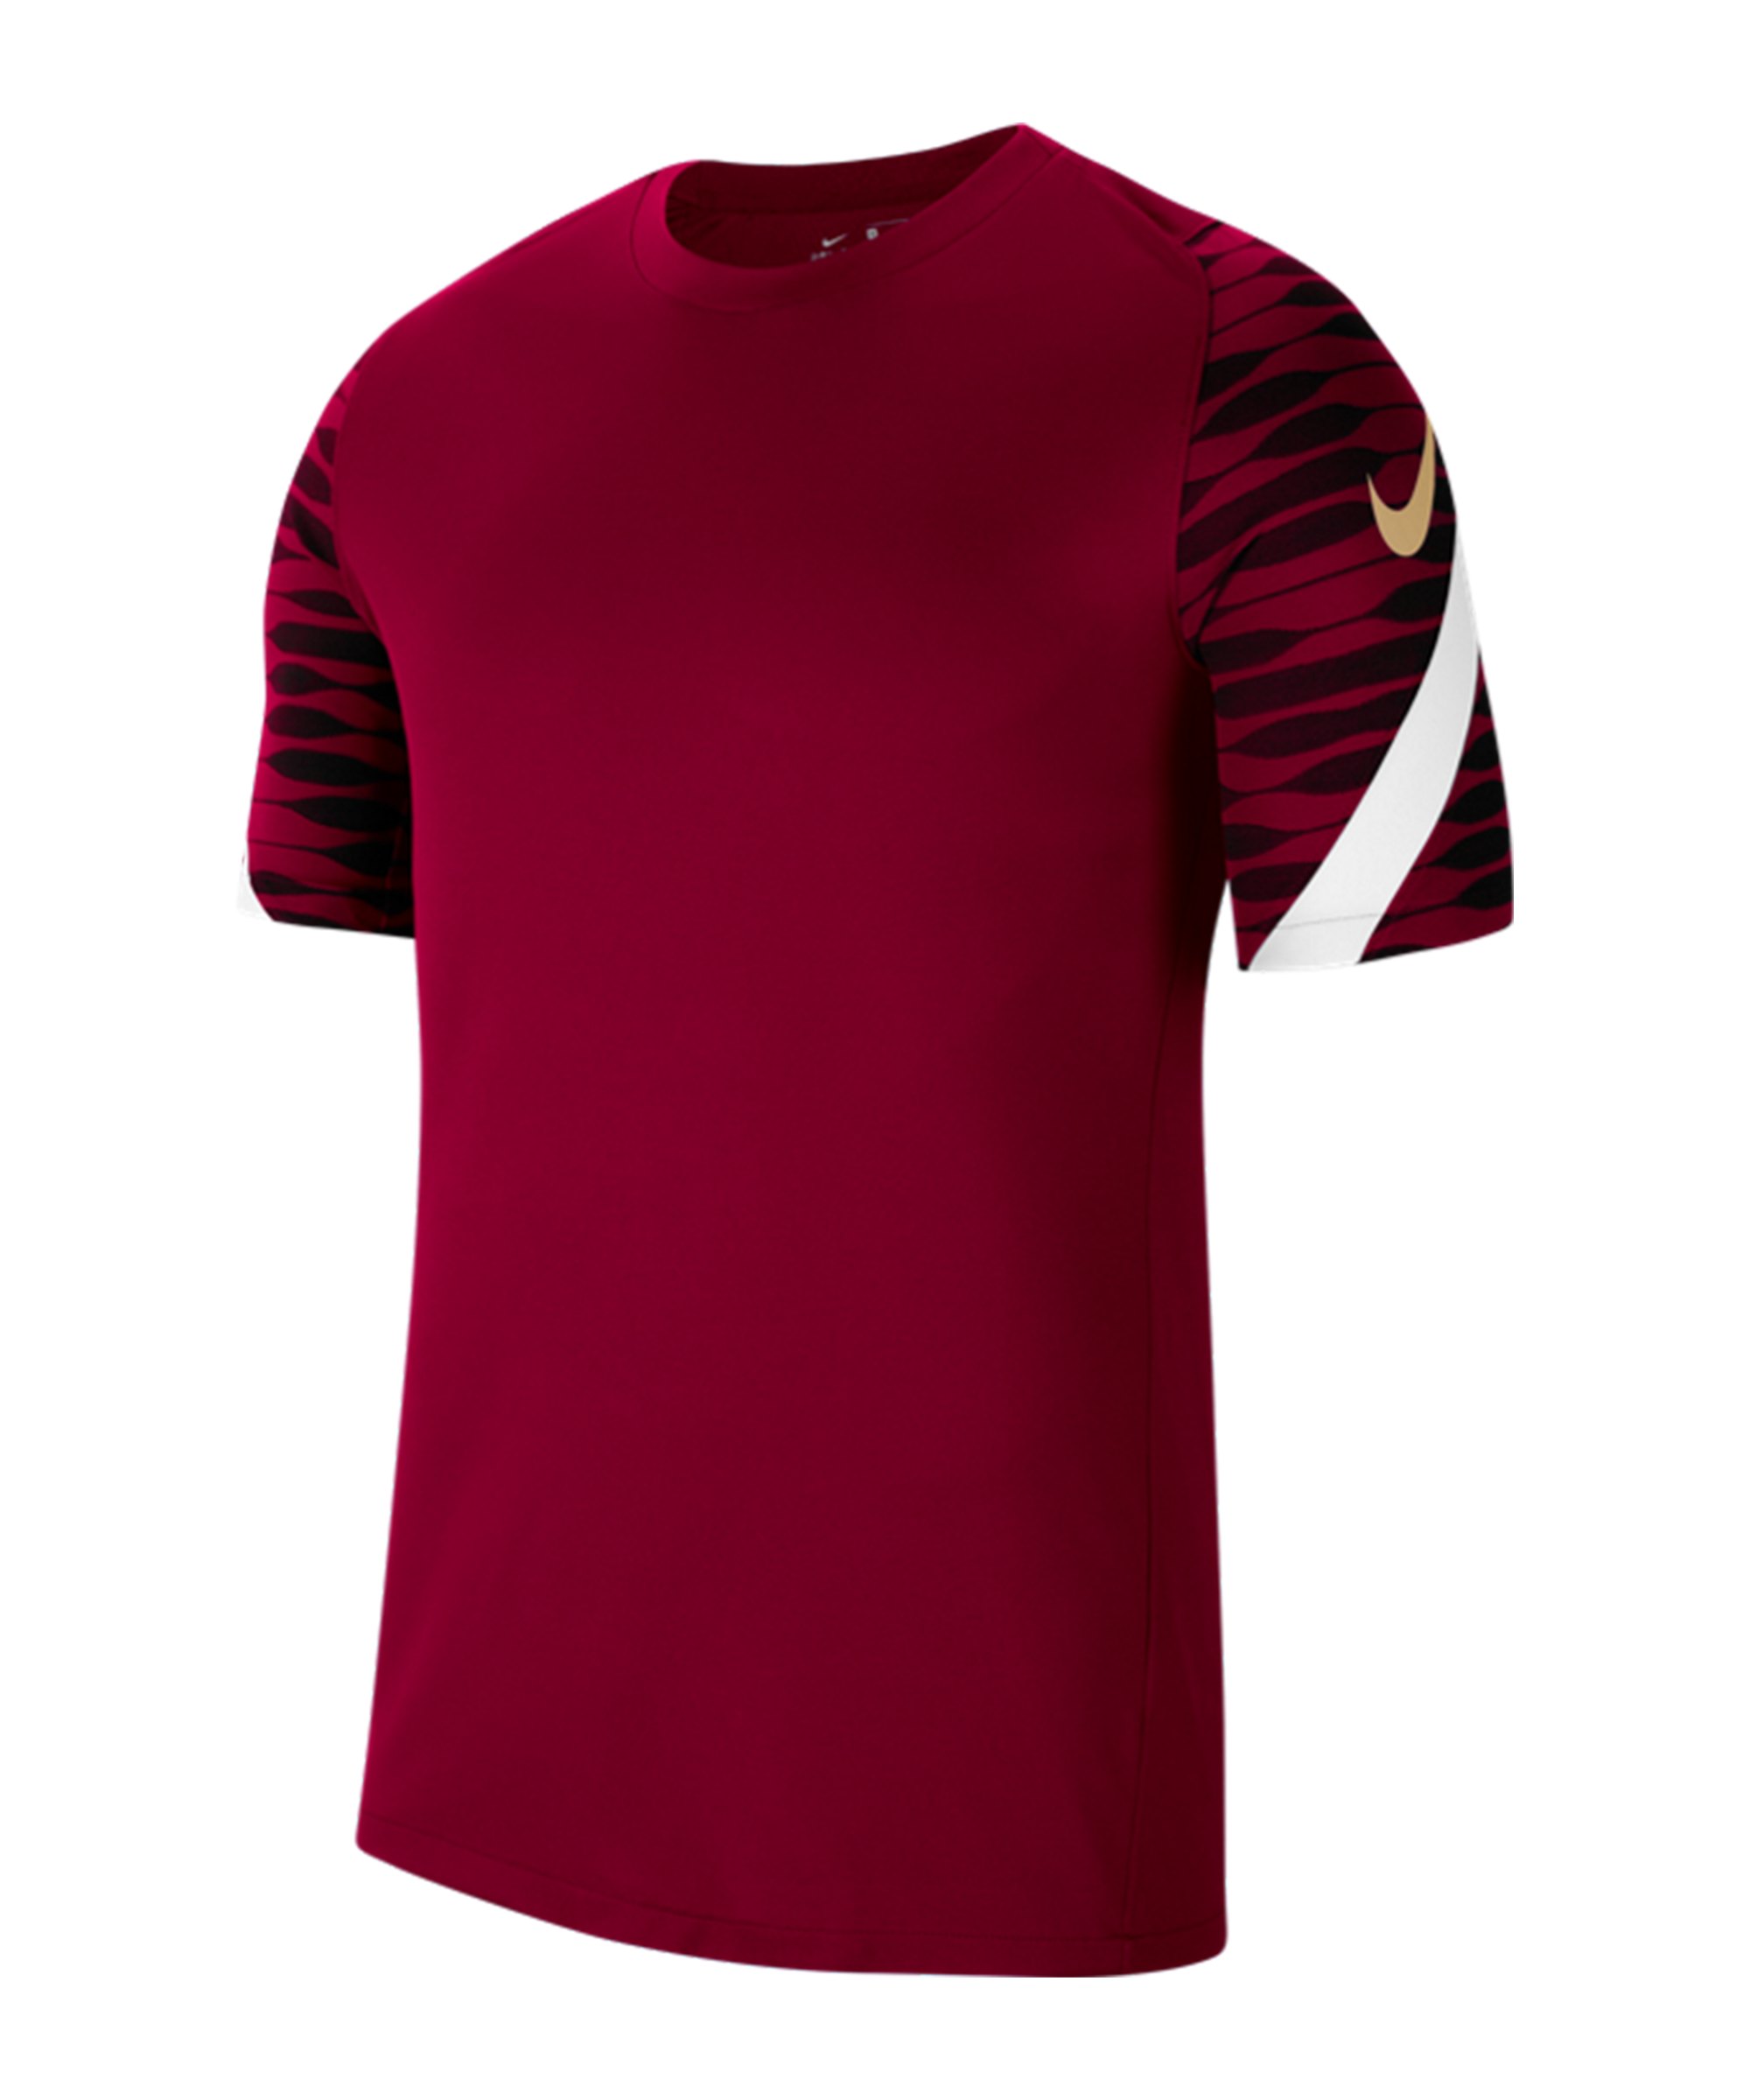 Nike Strike 21 T-Shirt Rot Schwarz Weiss F677 - rot